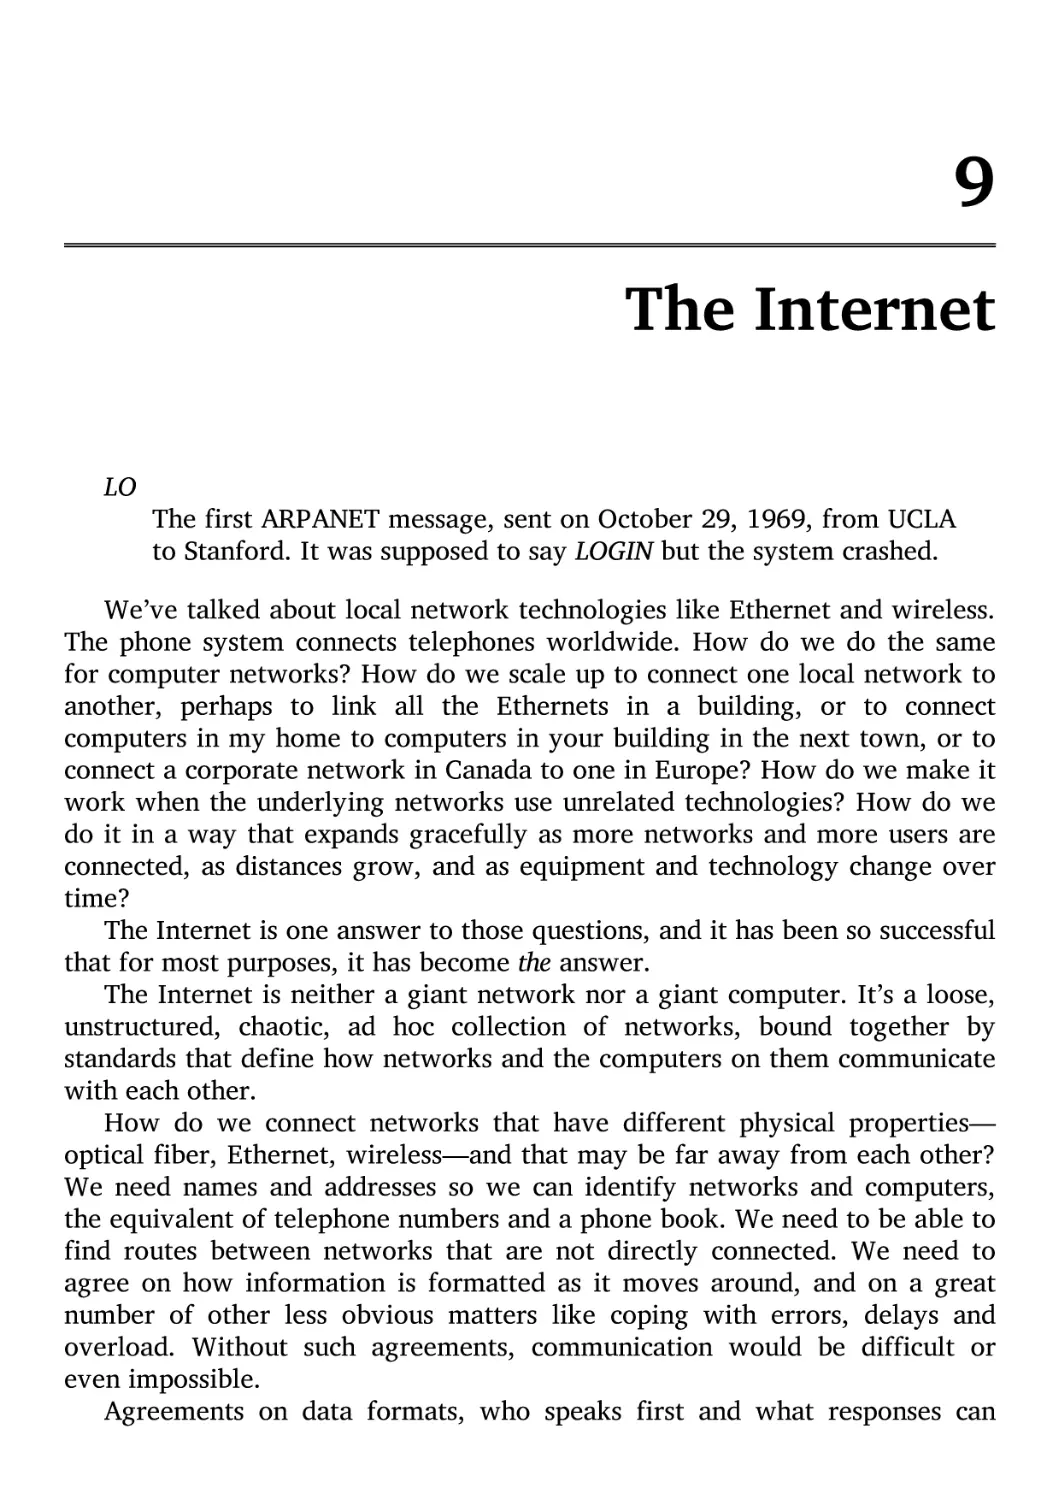 9. The Internet